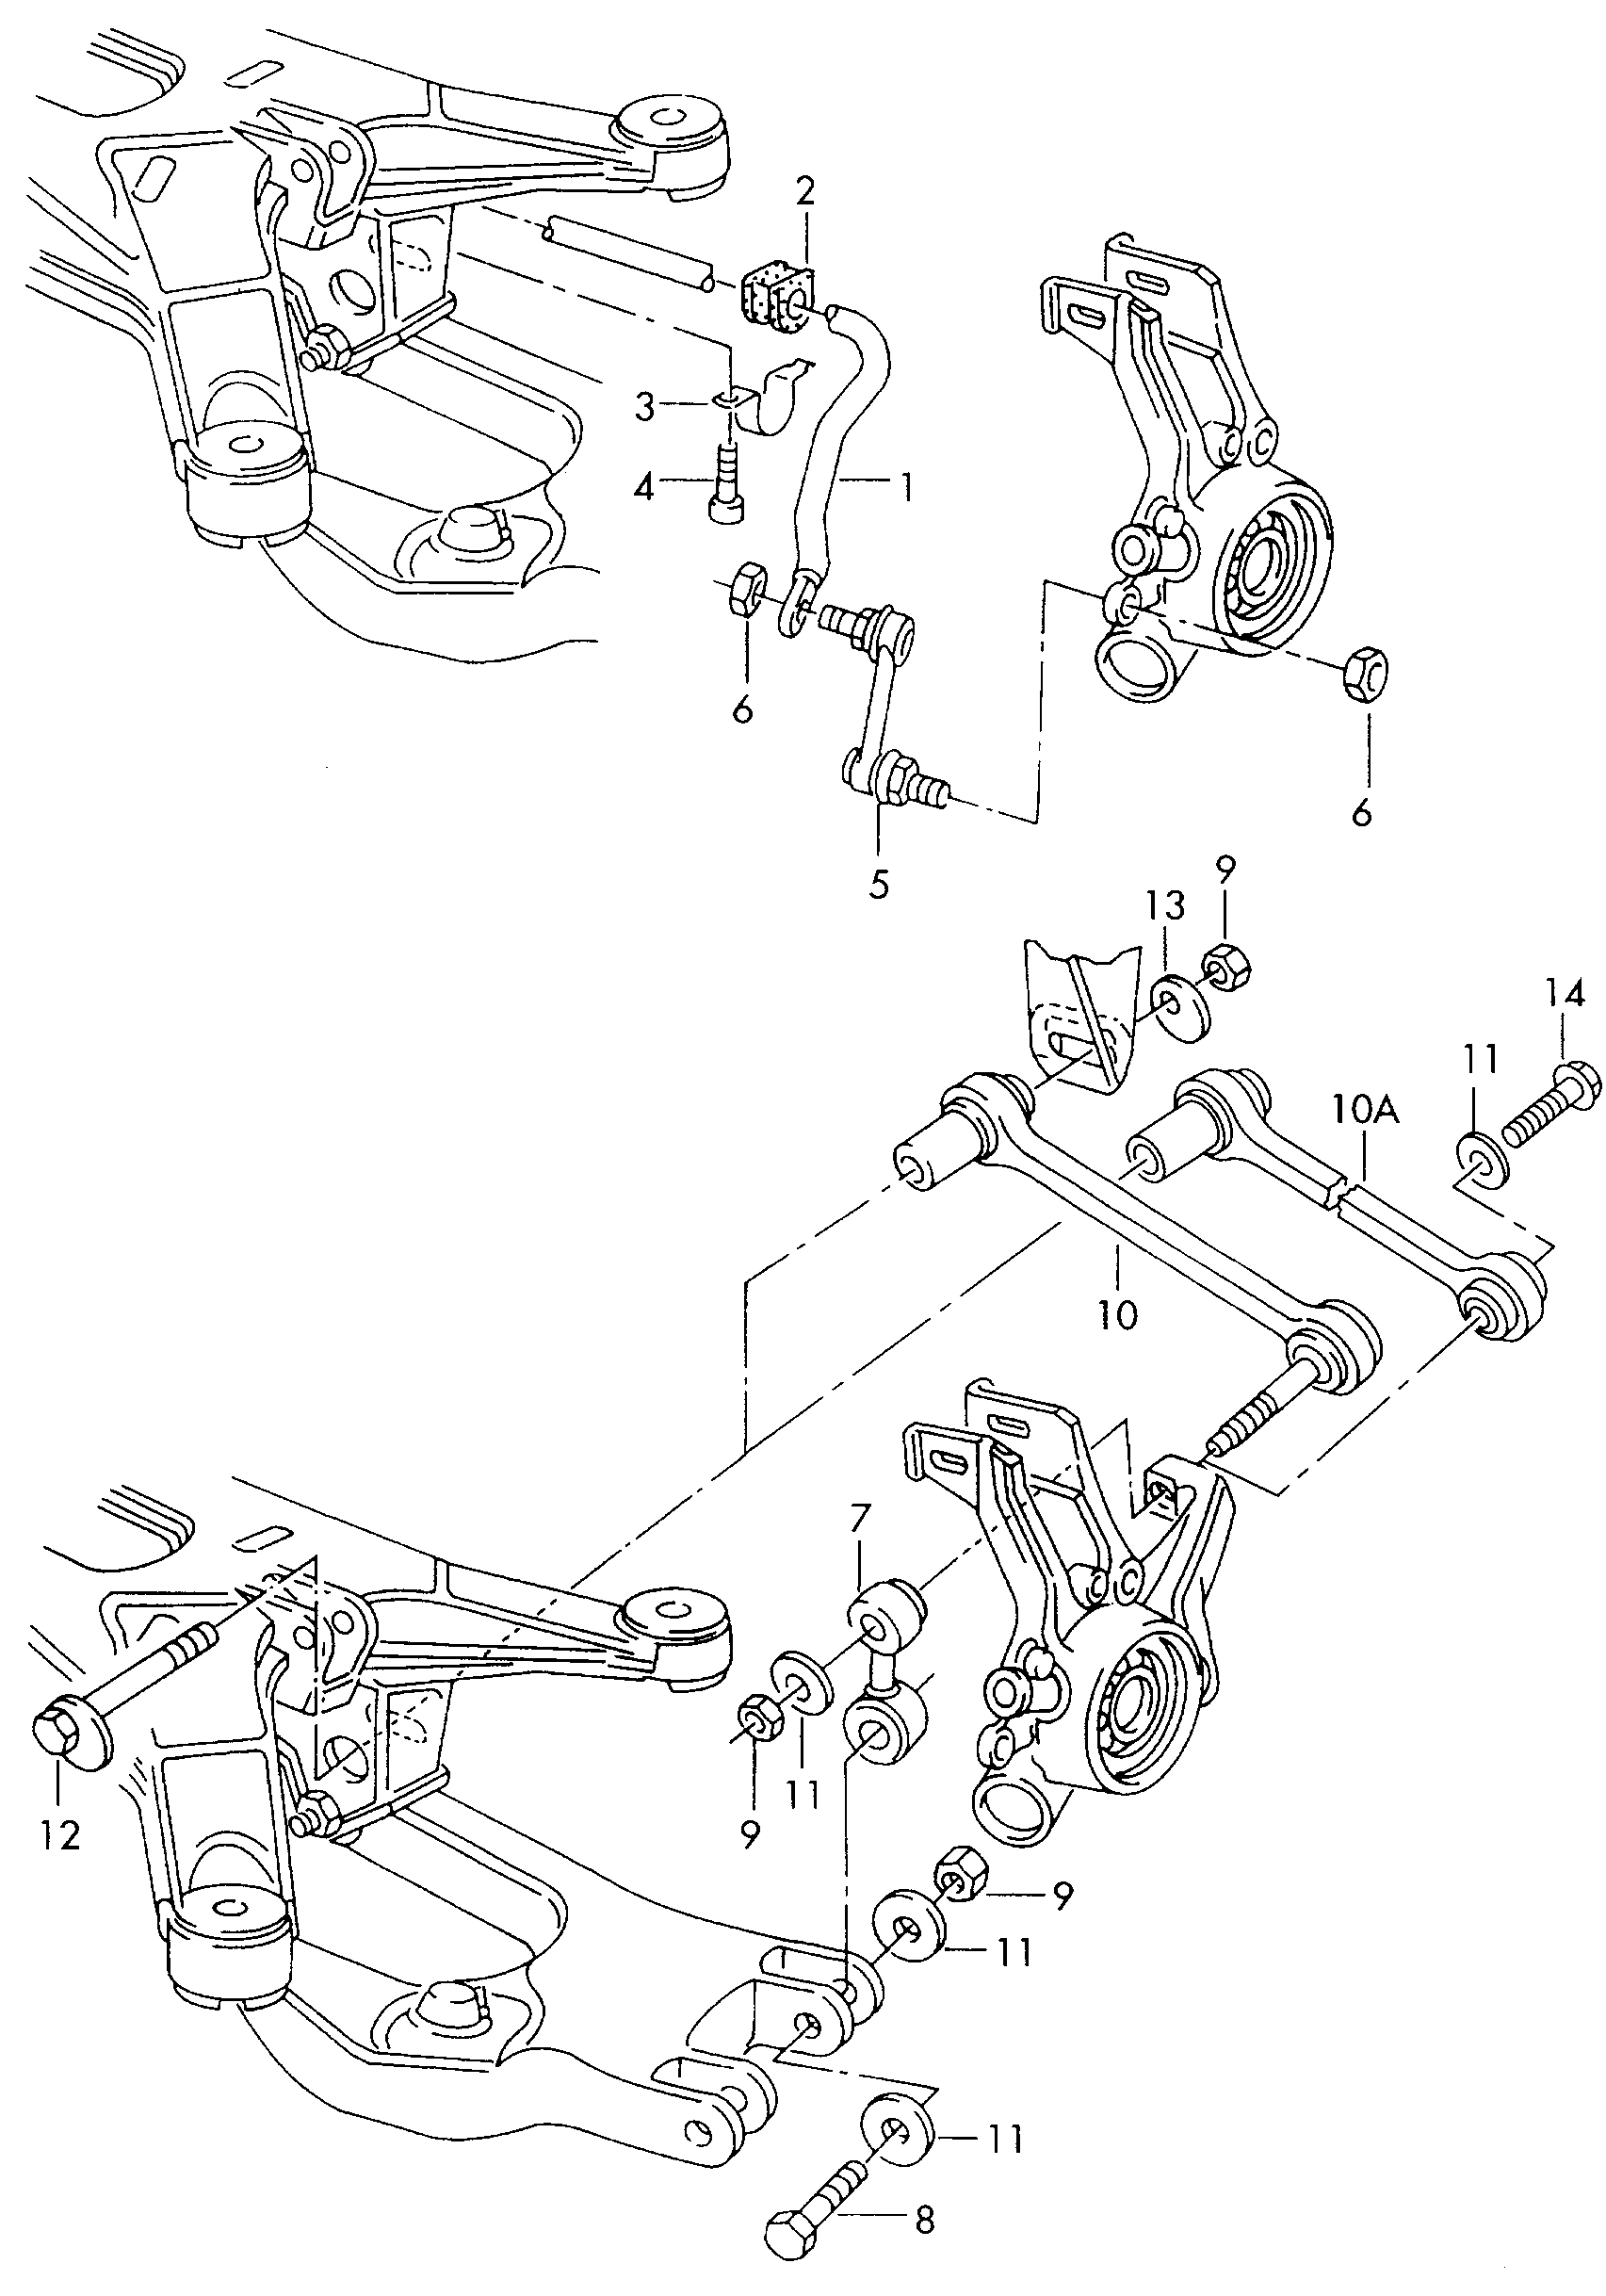 Track rodCoupling rodAnti-roll bar rear - Audi A8 - a8